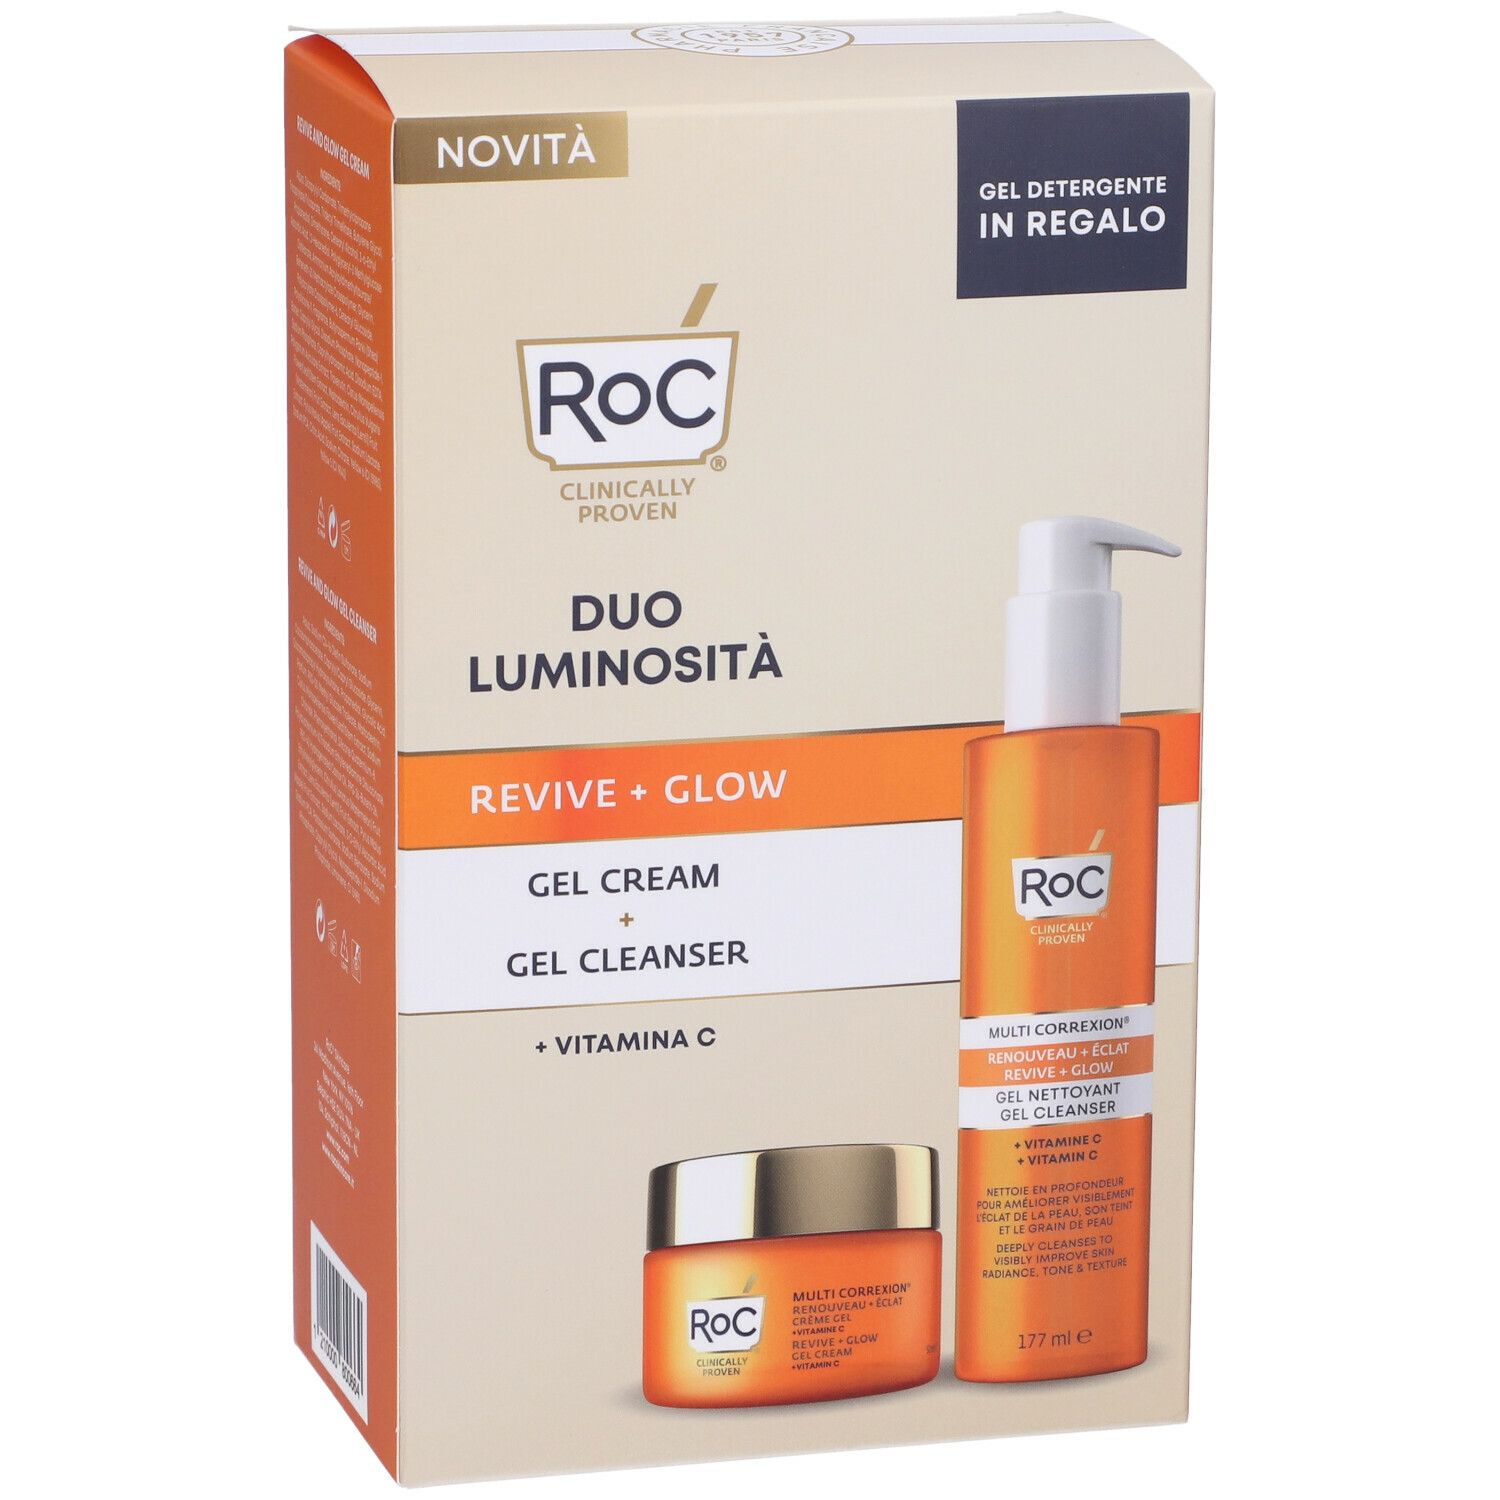 RoC® Duo Luminosità Revive + Glow Gel Crema + Gel Cleaser